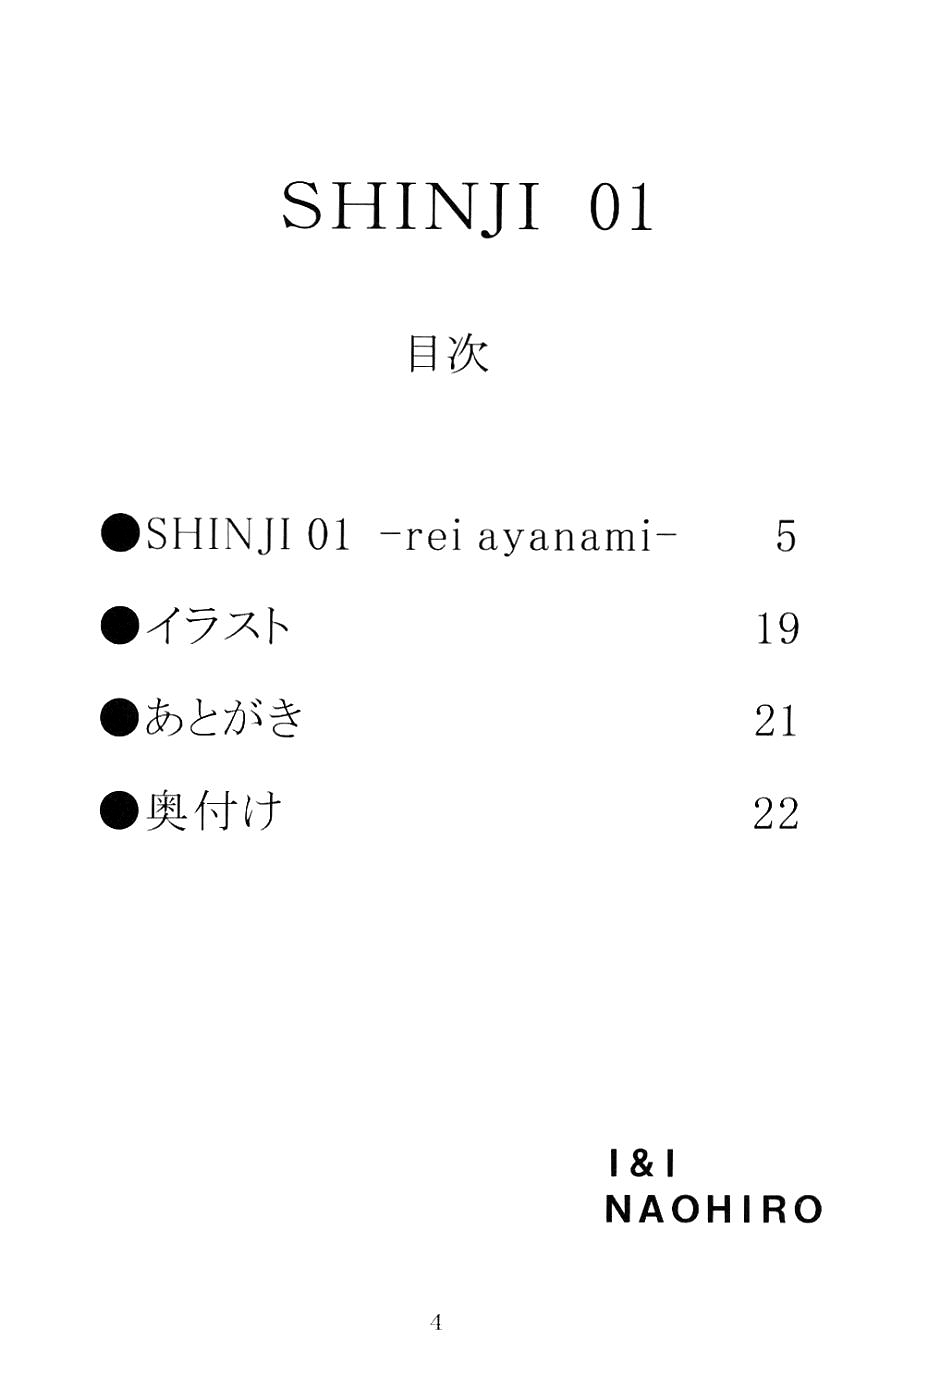 [Neon Genesis Evangelion] SHINJI 01 - rei ayanami [ENG] 